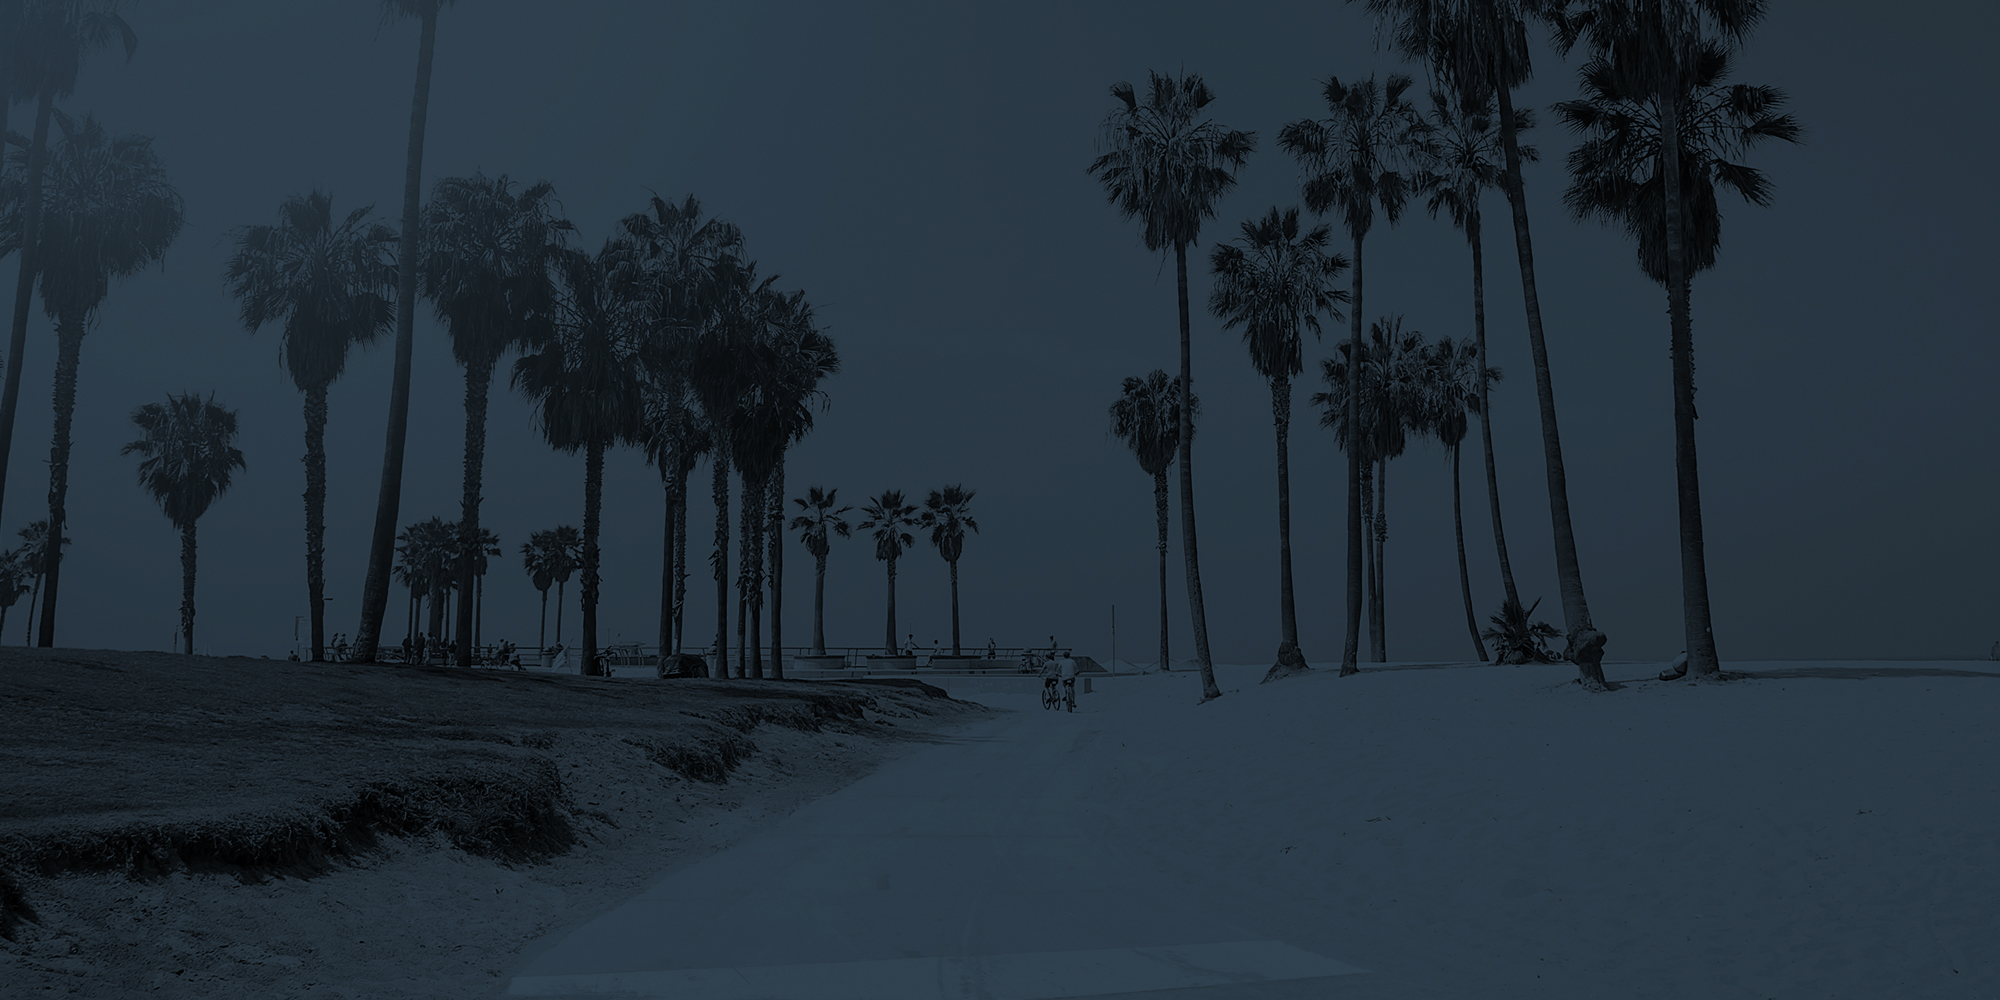 venice beach sidewalk with palm trees